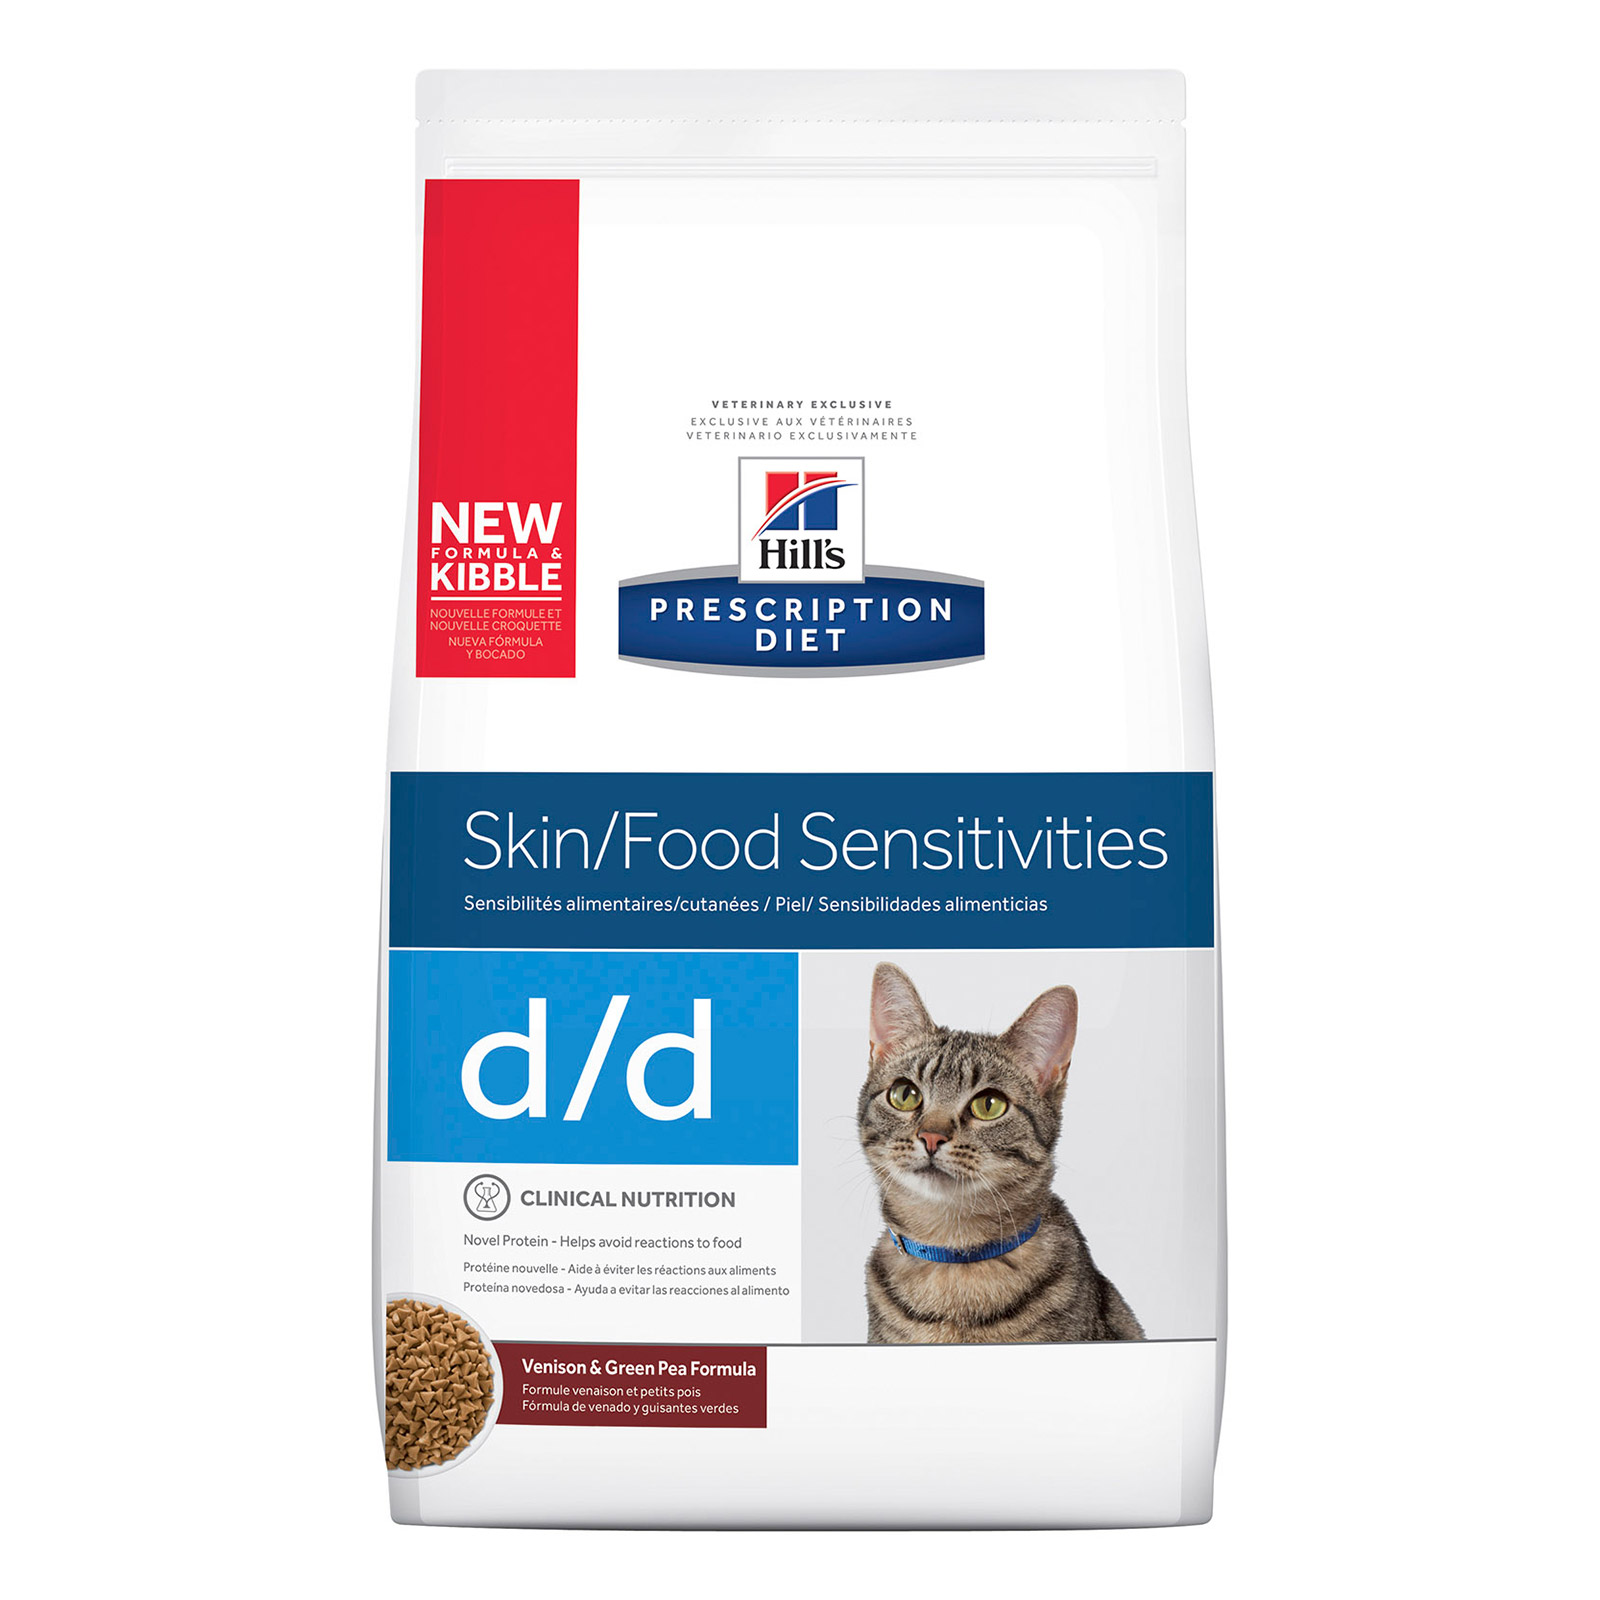 Hill's Prescription Diet d/d Venison & Green Pea Formula Dry Cat Food for Food